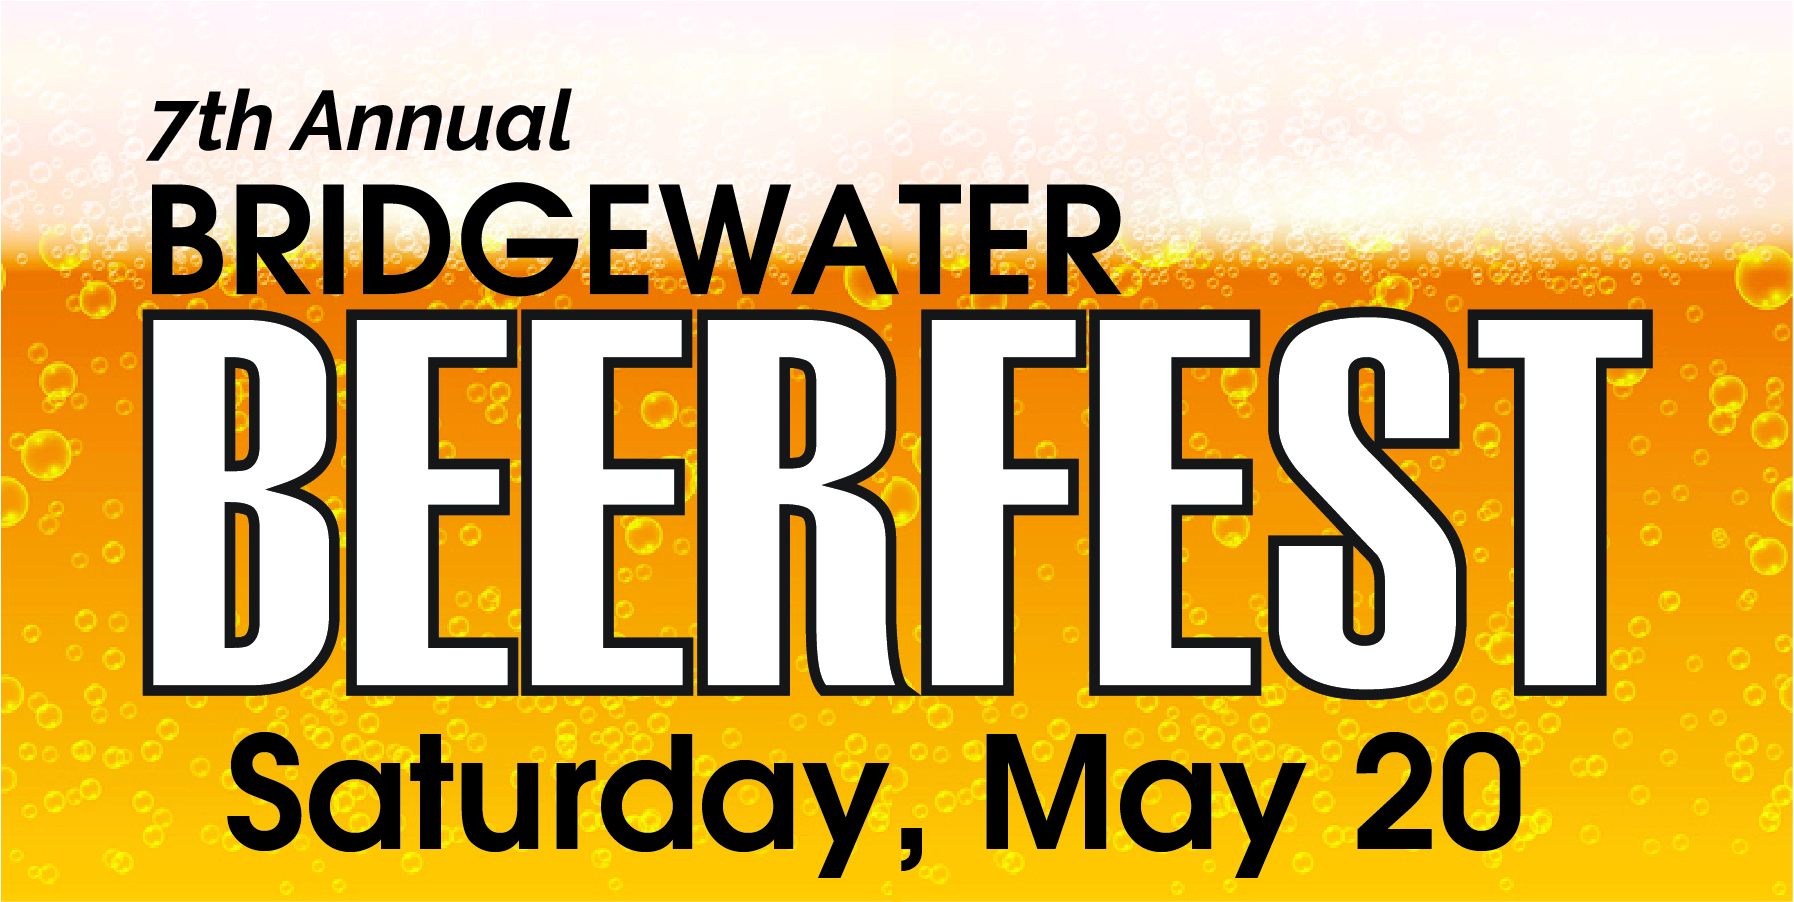 Bridgewater Beerfest banner image